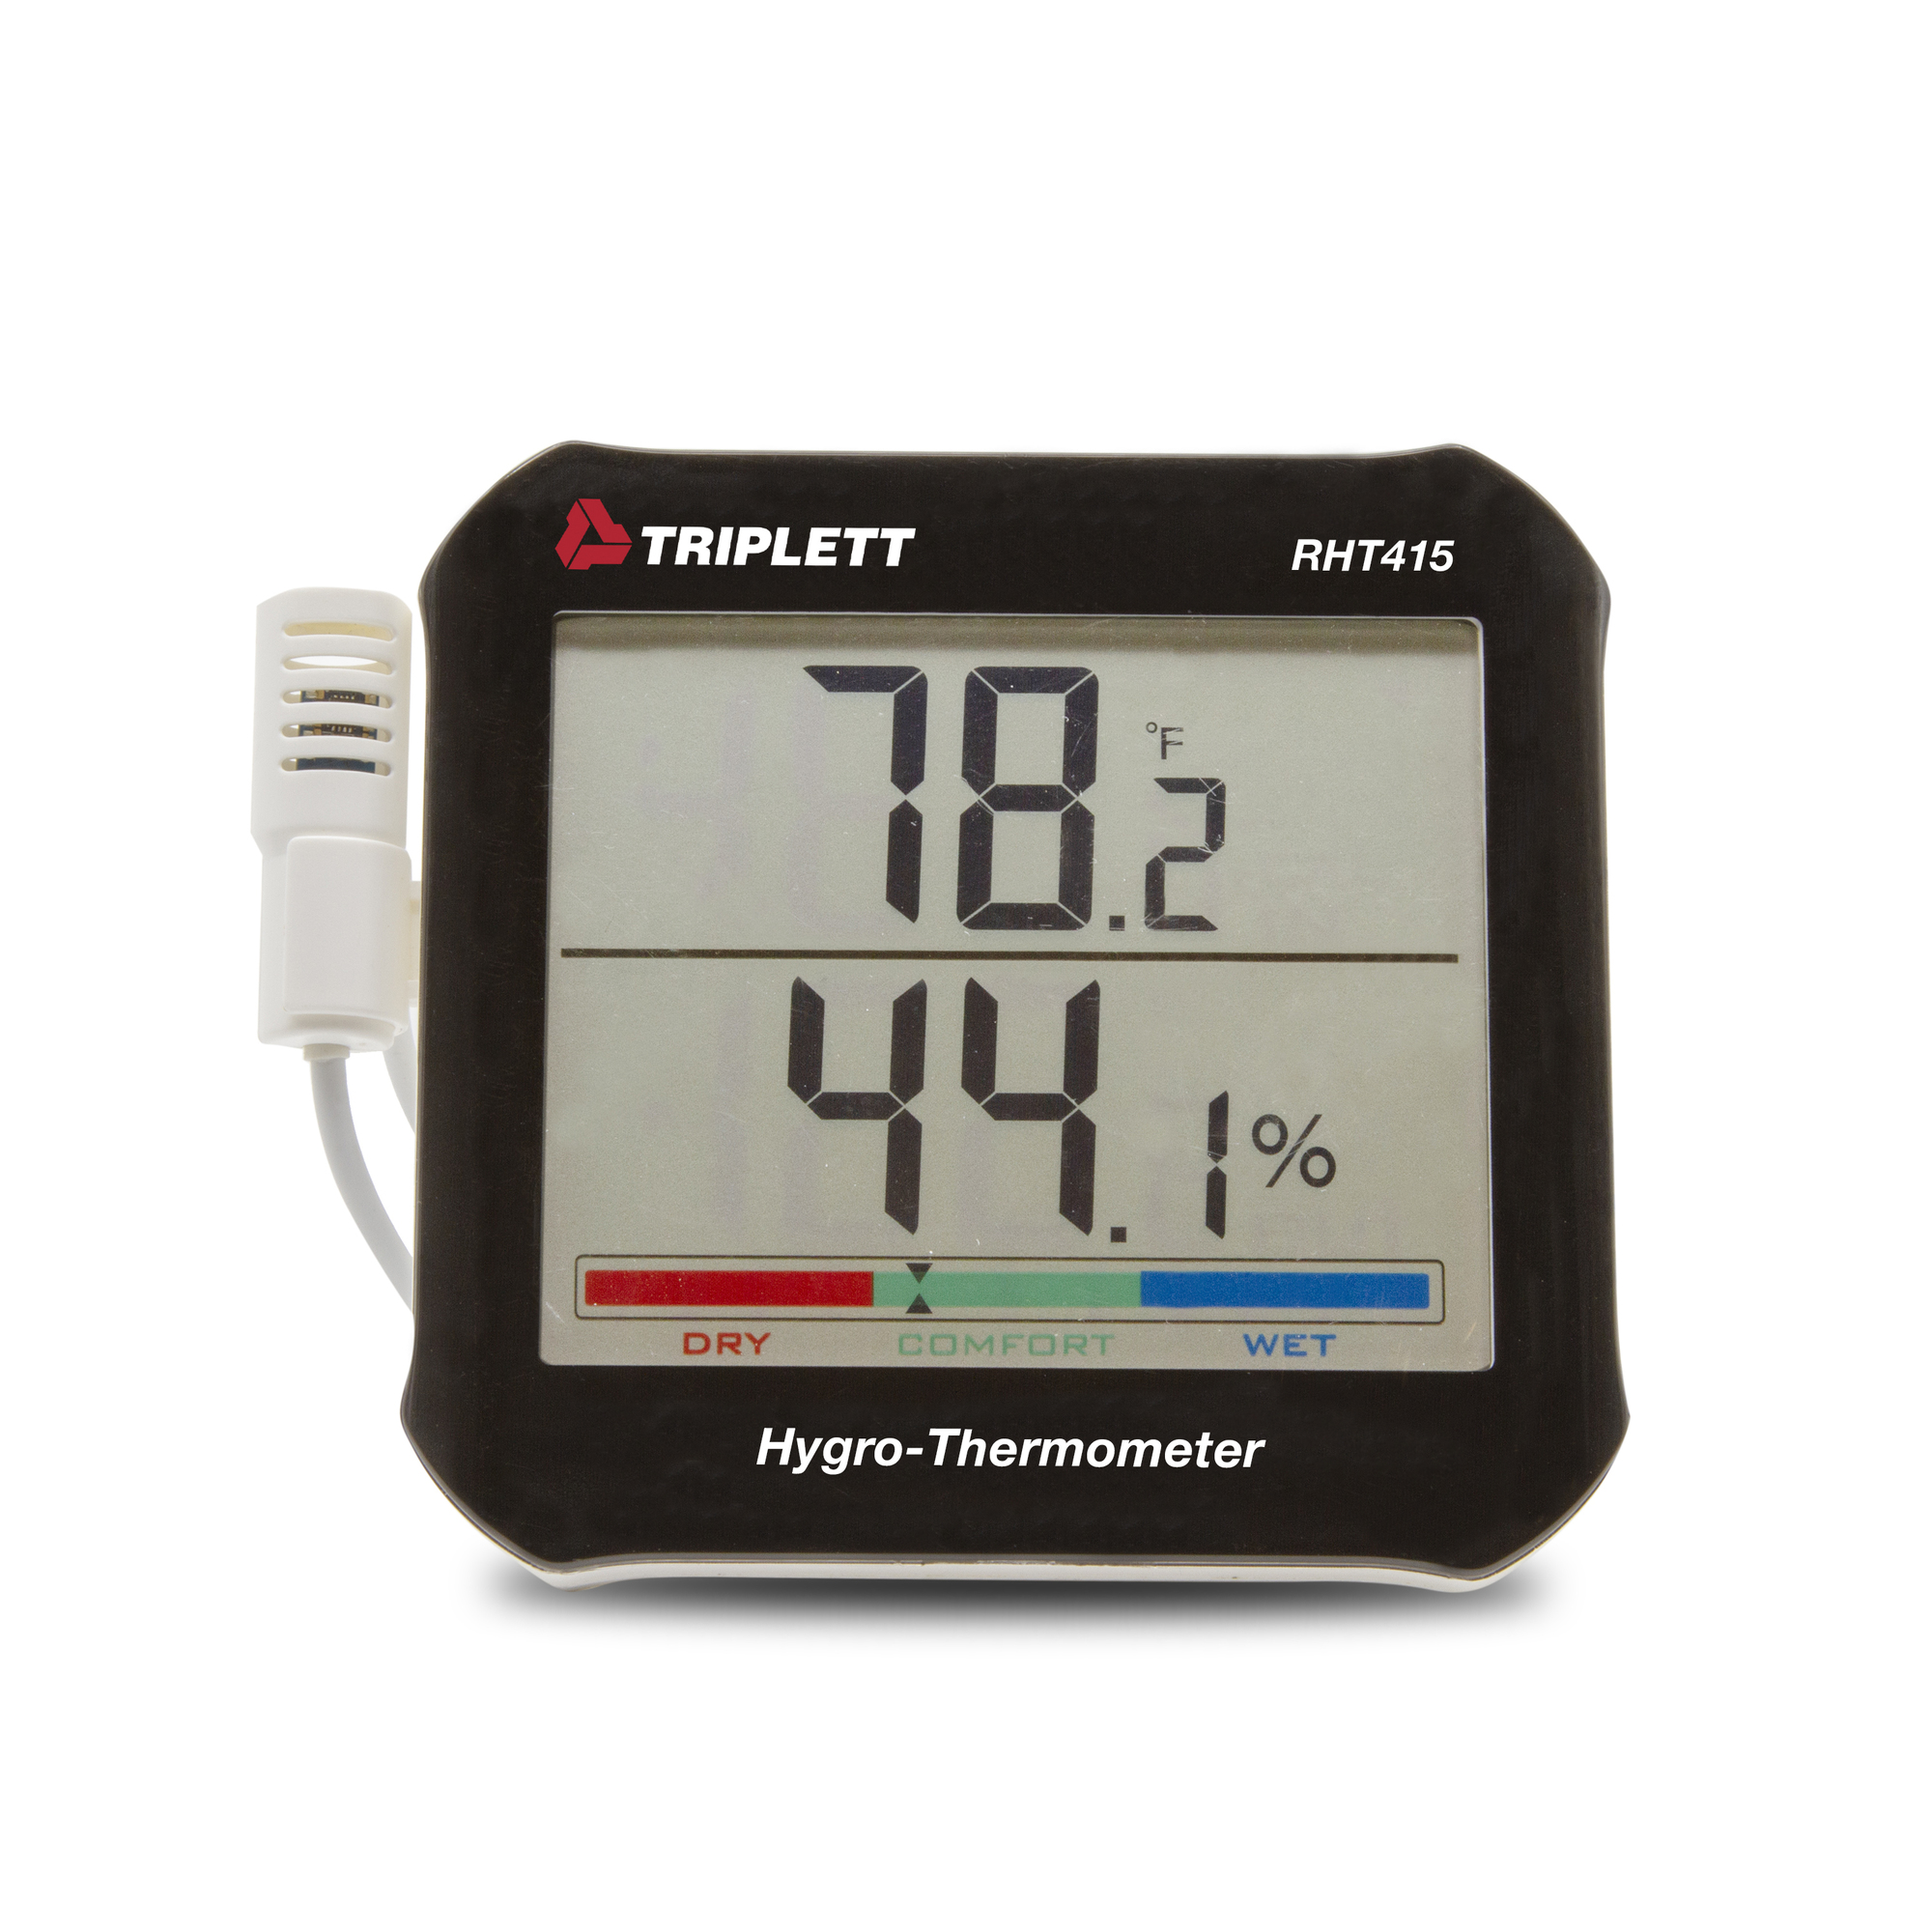 Triplett, Hygro-Thermometer with Remote Probe, Model RHT415